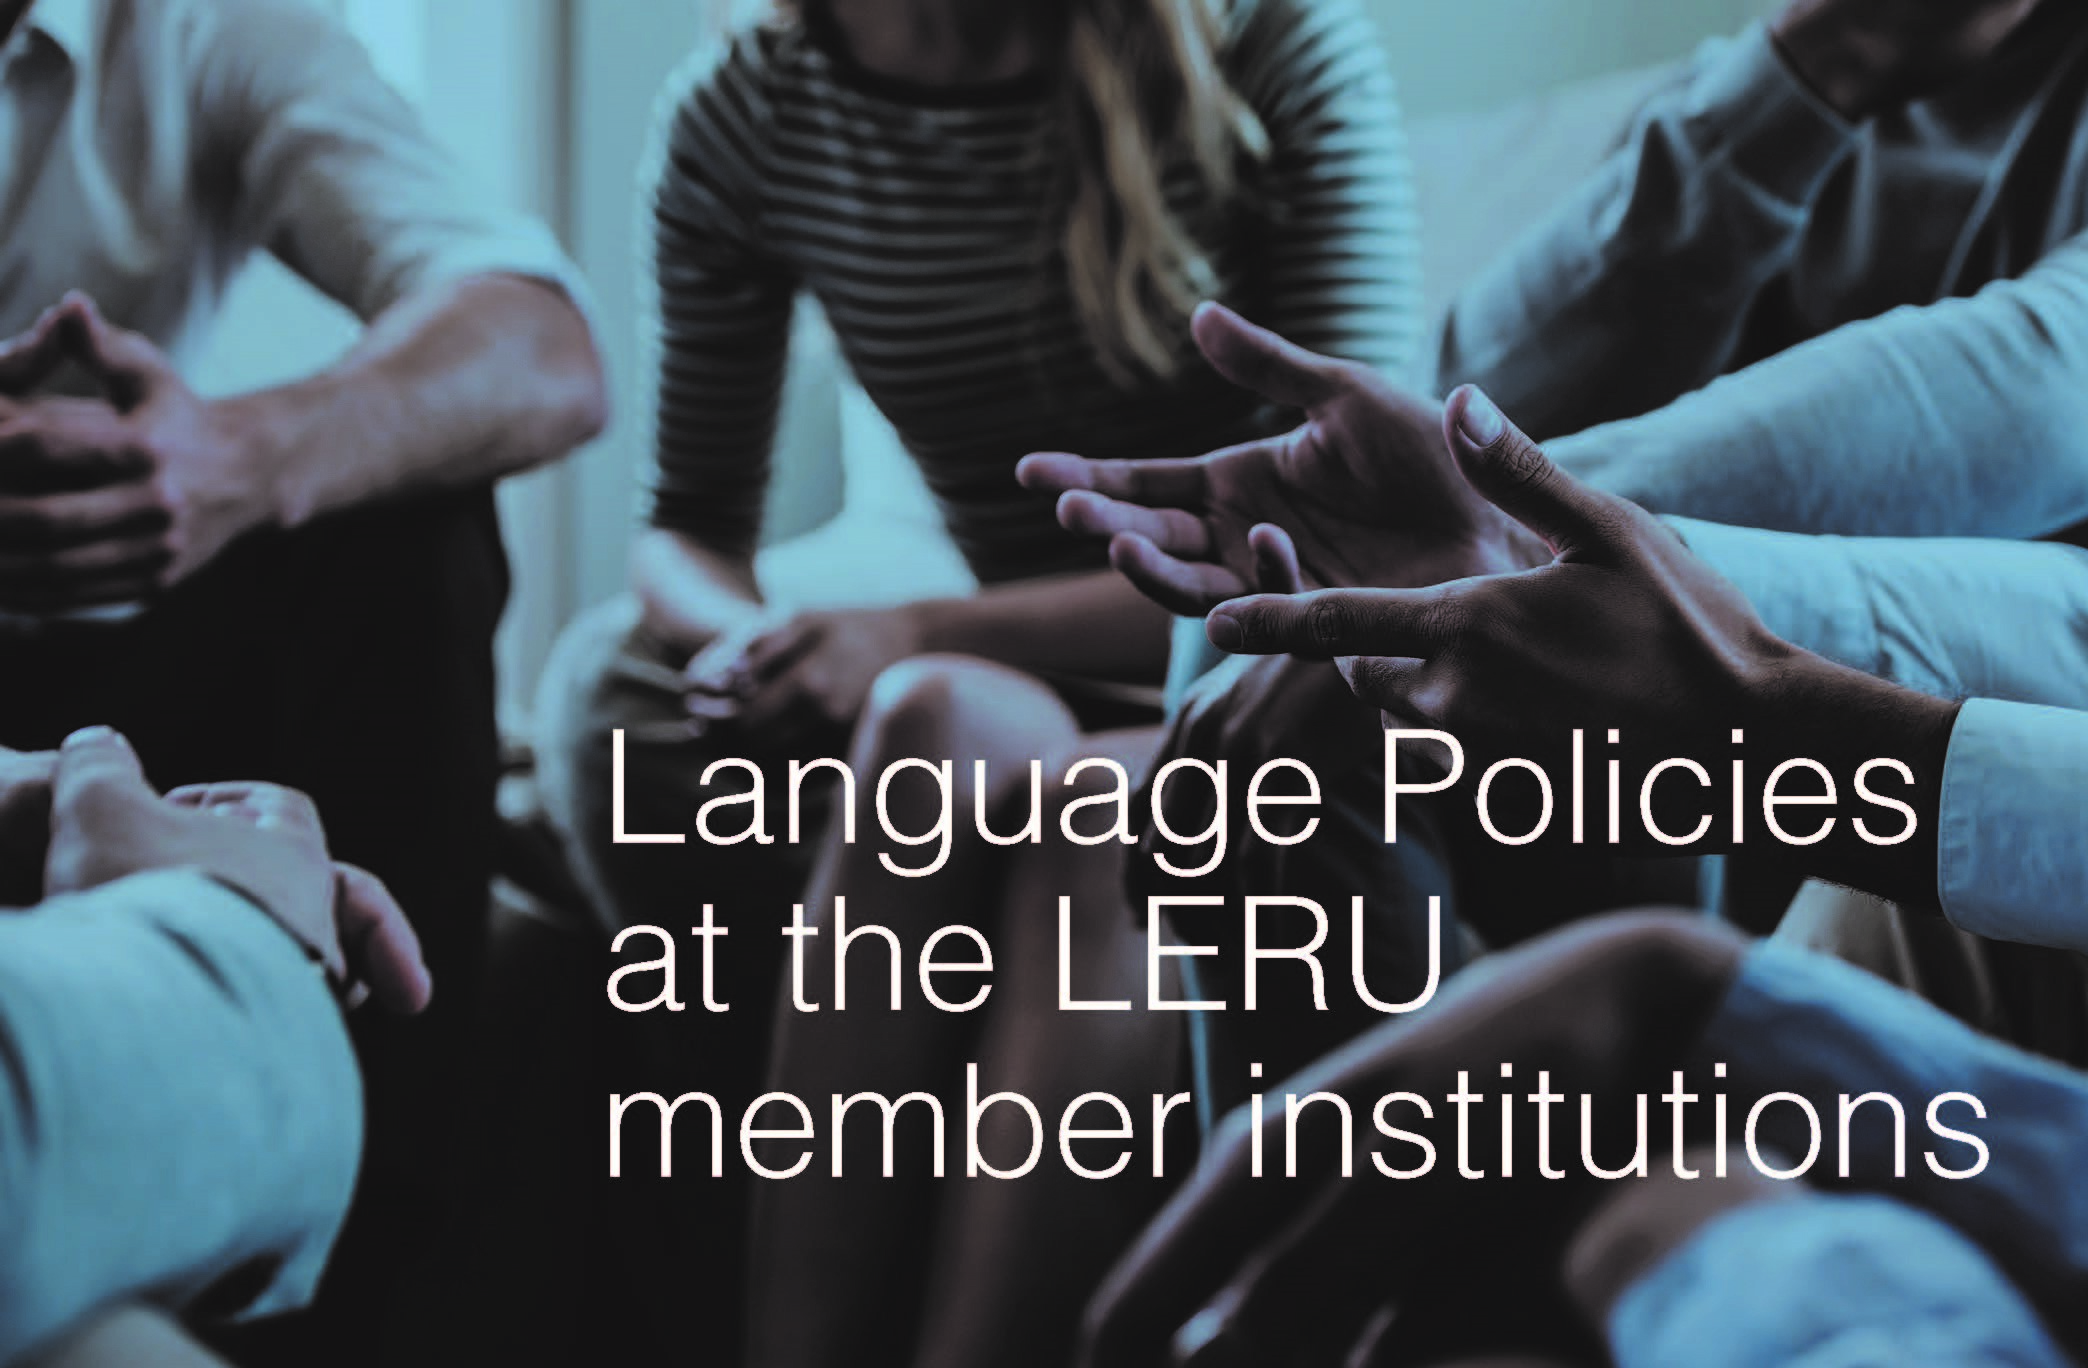 "Language Policies at the LERU member institutions" - FRIAS director Professor Bernd Kortmann publishes briefing paper for the League of European Research Universities (LERU)